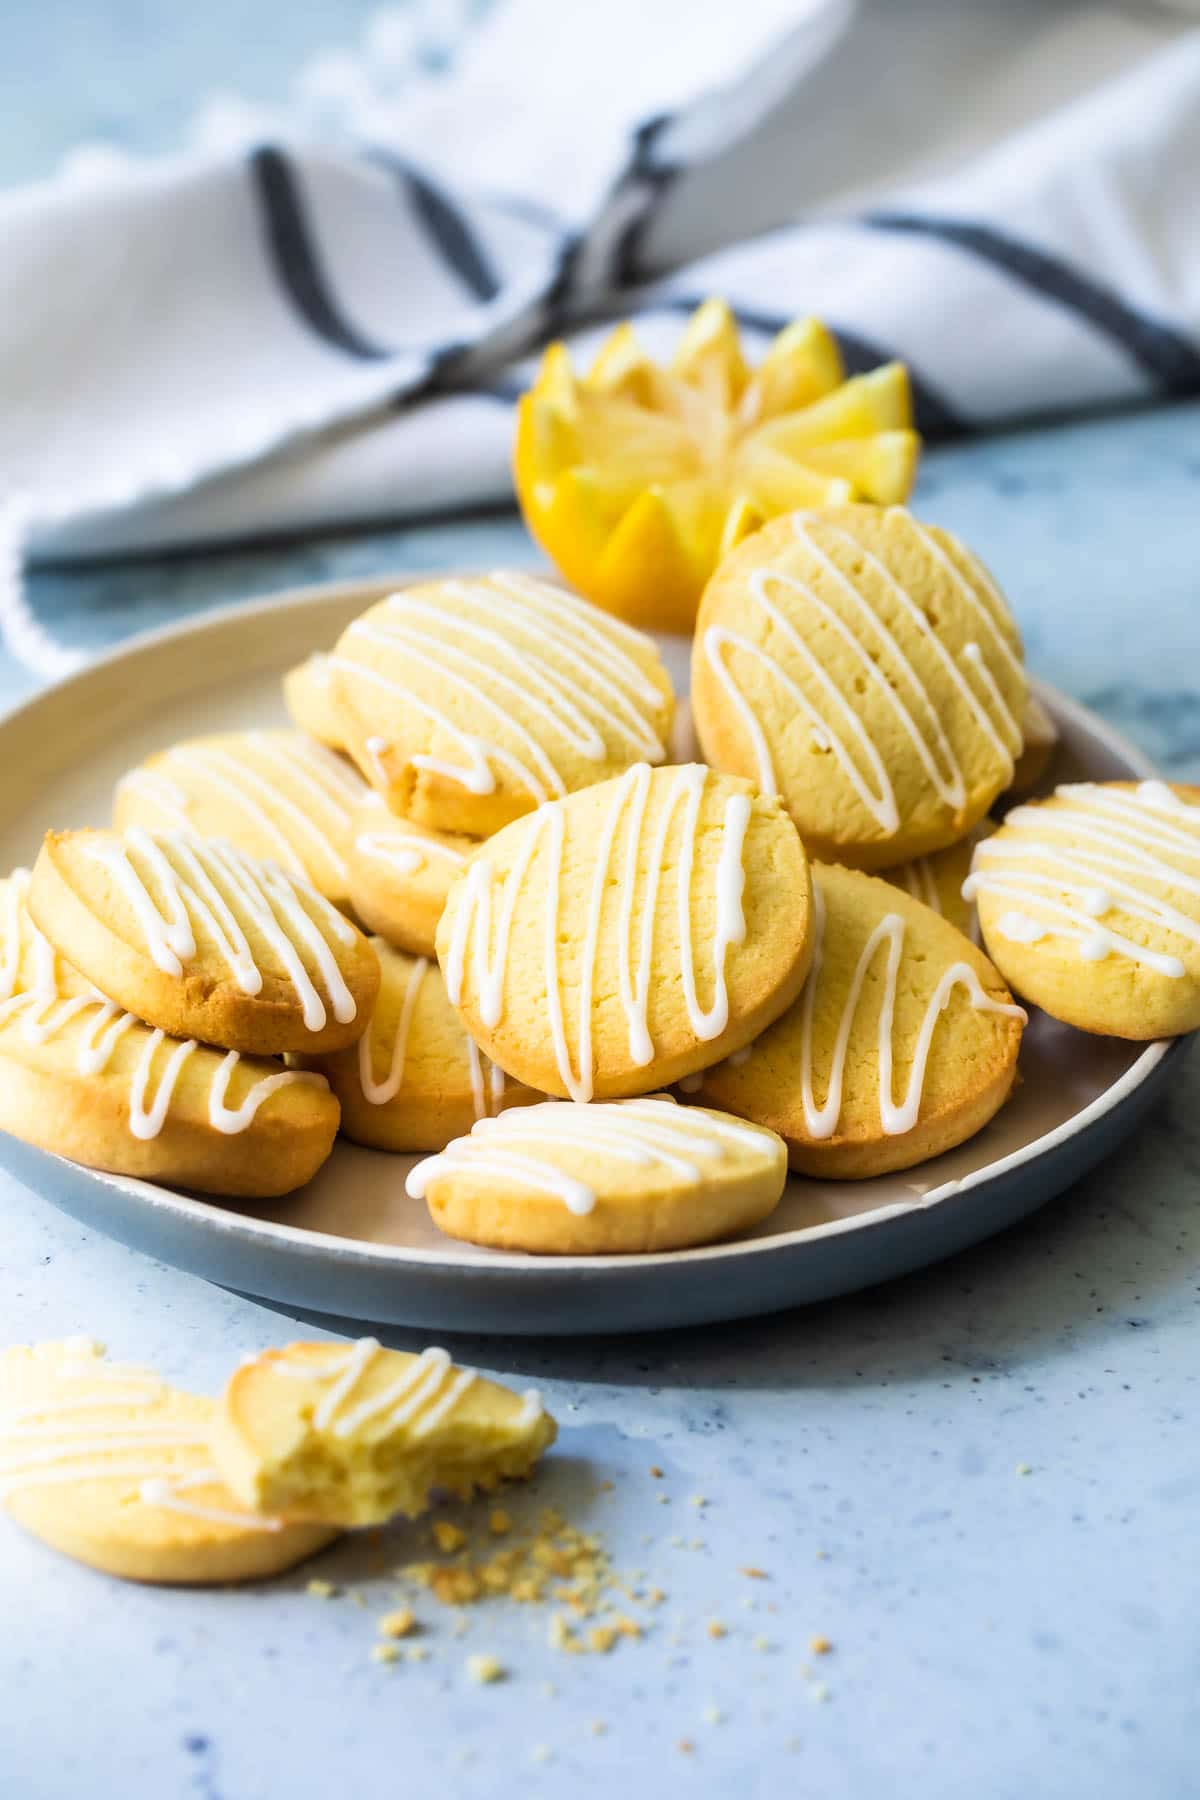 Lemon cookies on a plate.